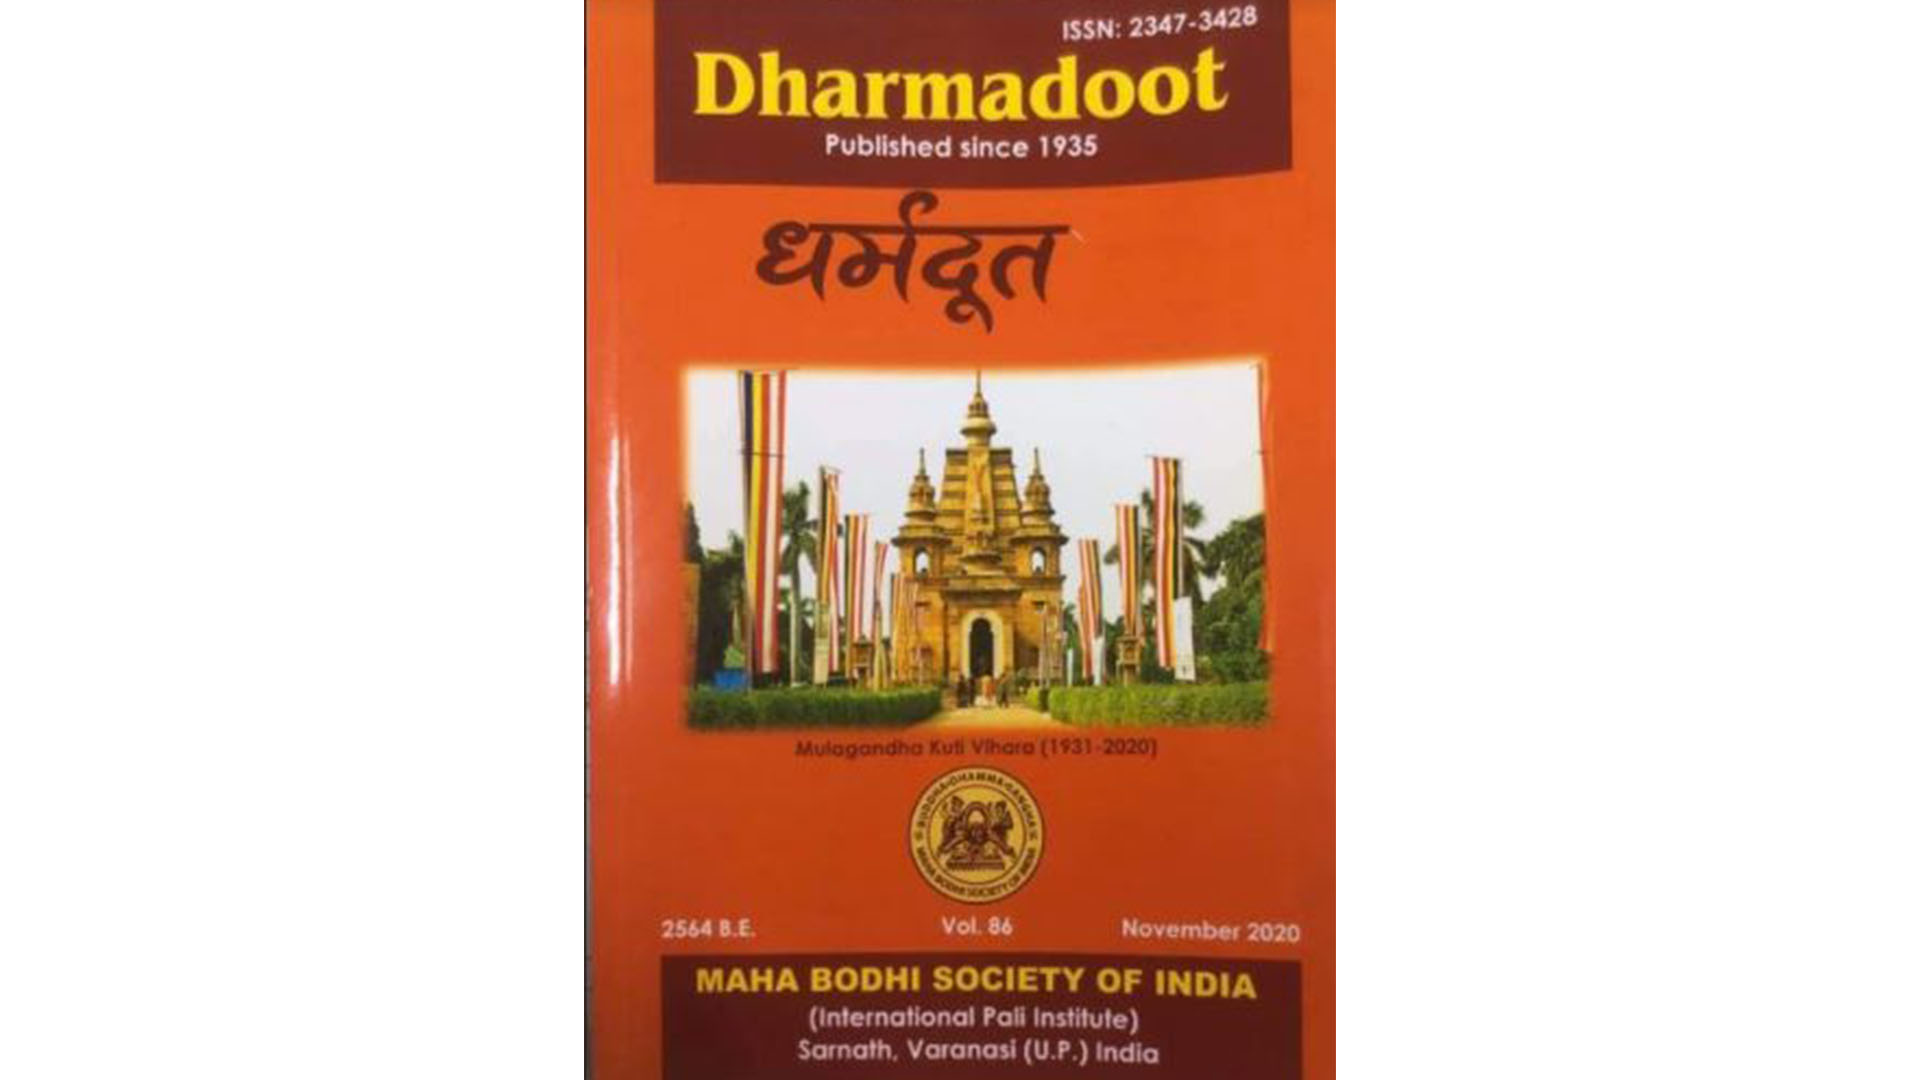 Dharmadoot Journal by Maha Bodhi Society